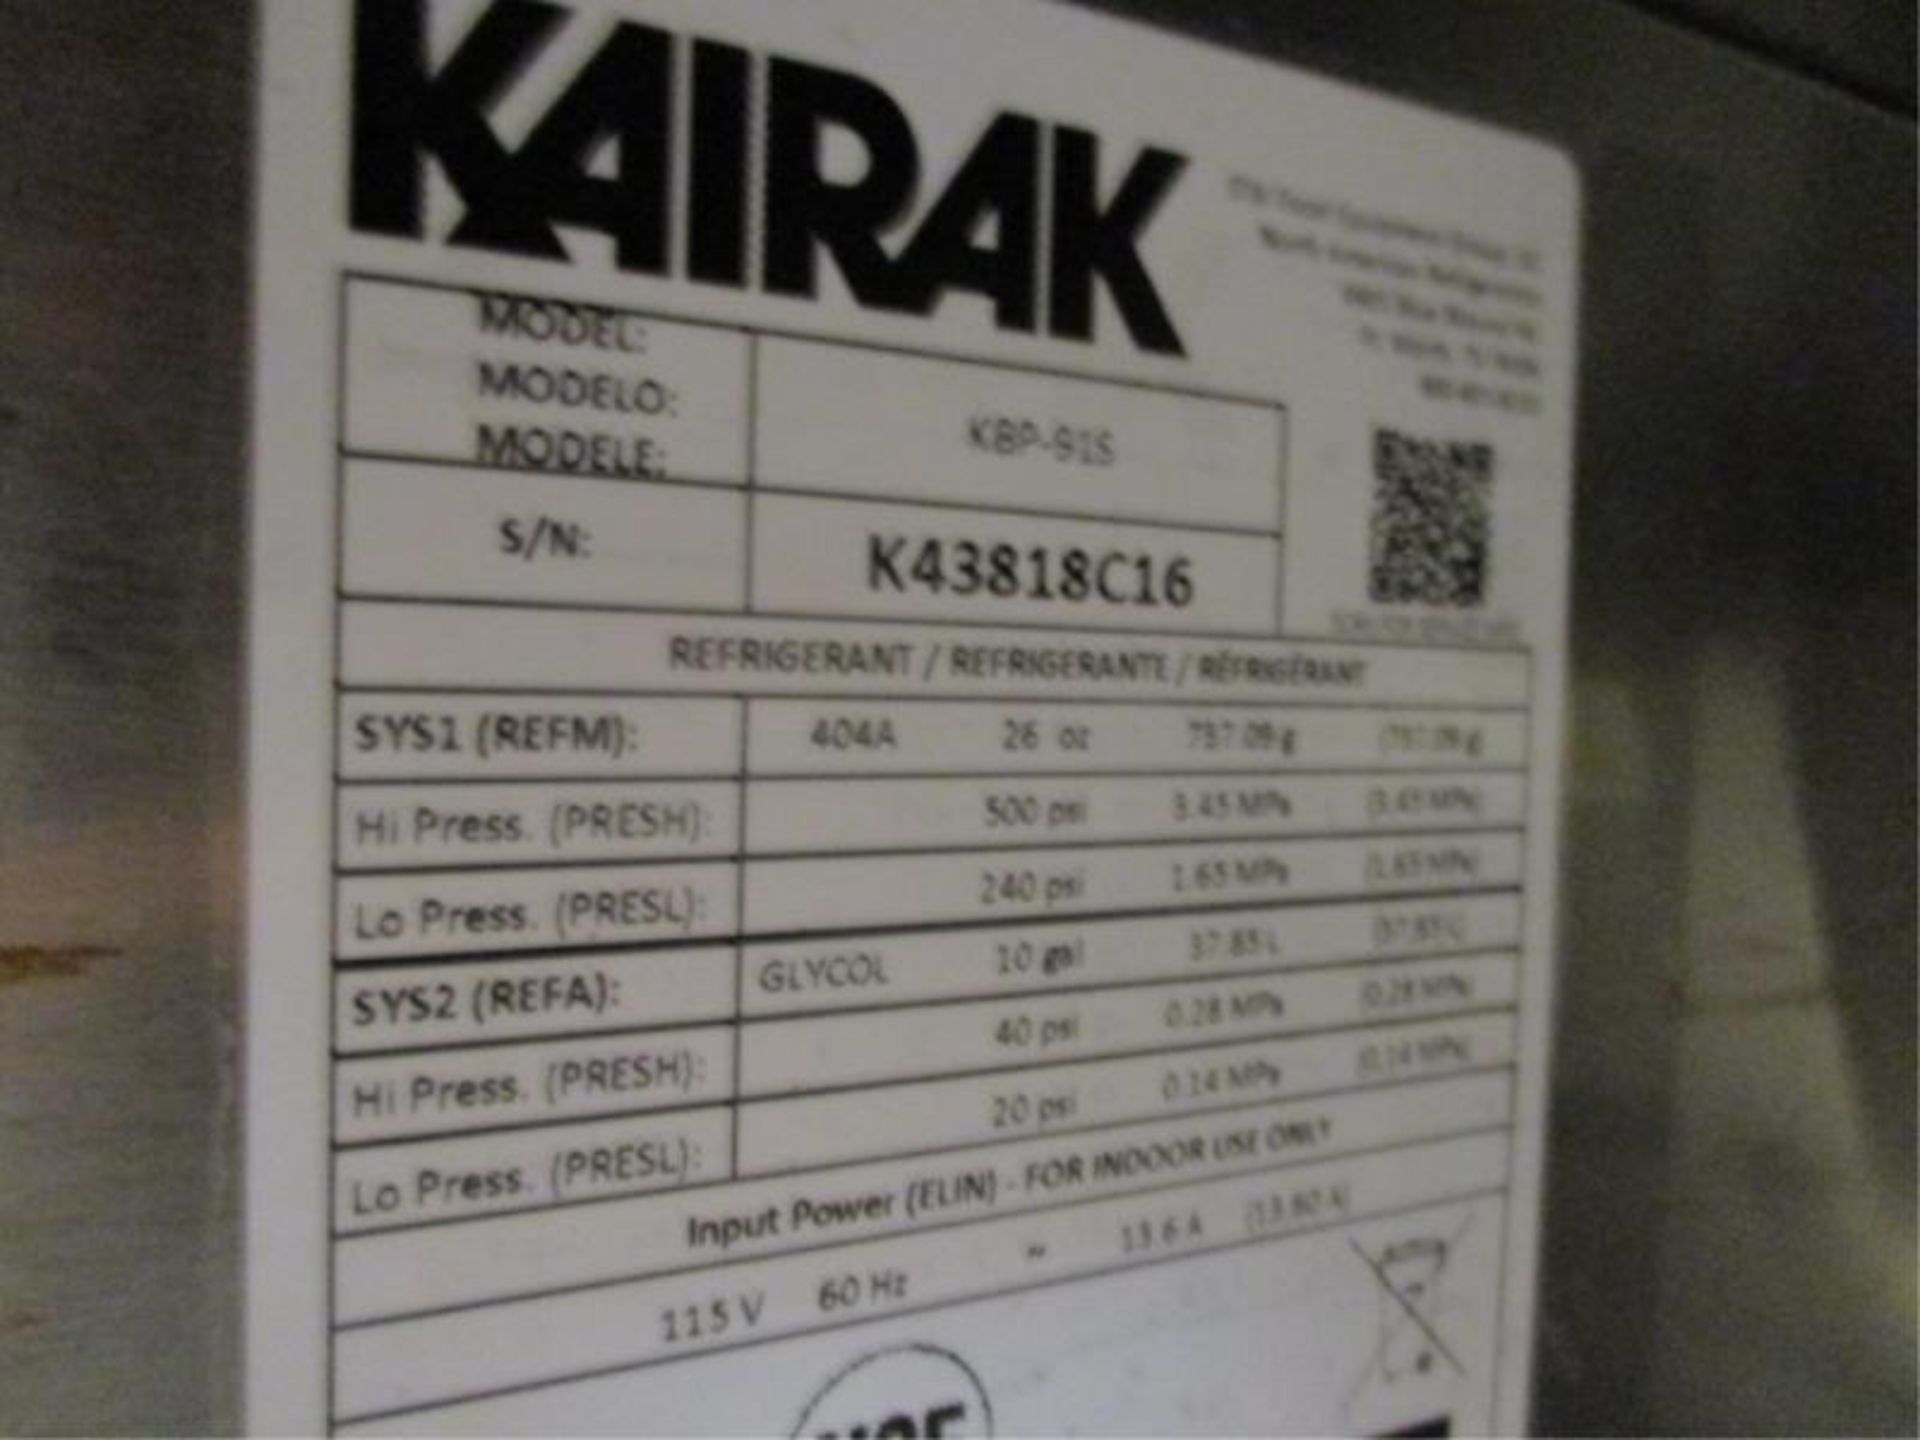 Sandwich prep with 3 lower doors by Kairak Model KBP-91S, Serial # K43818C16 - Image 6 of 6